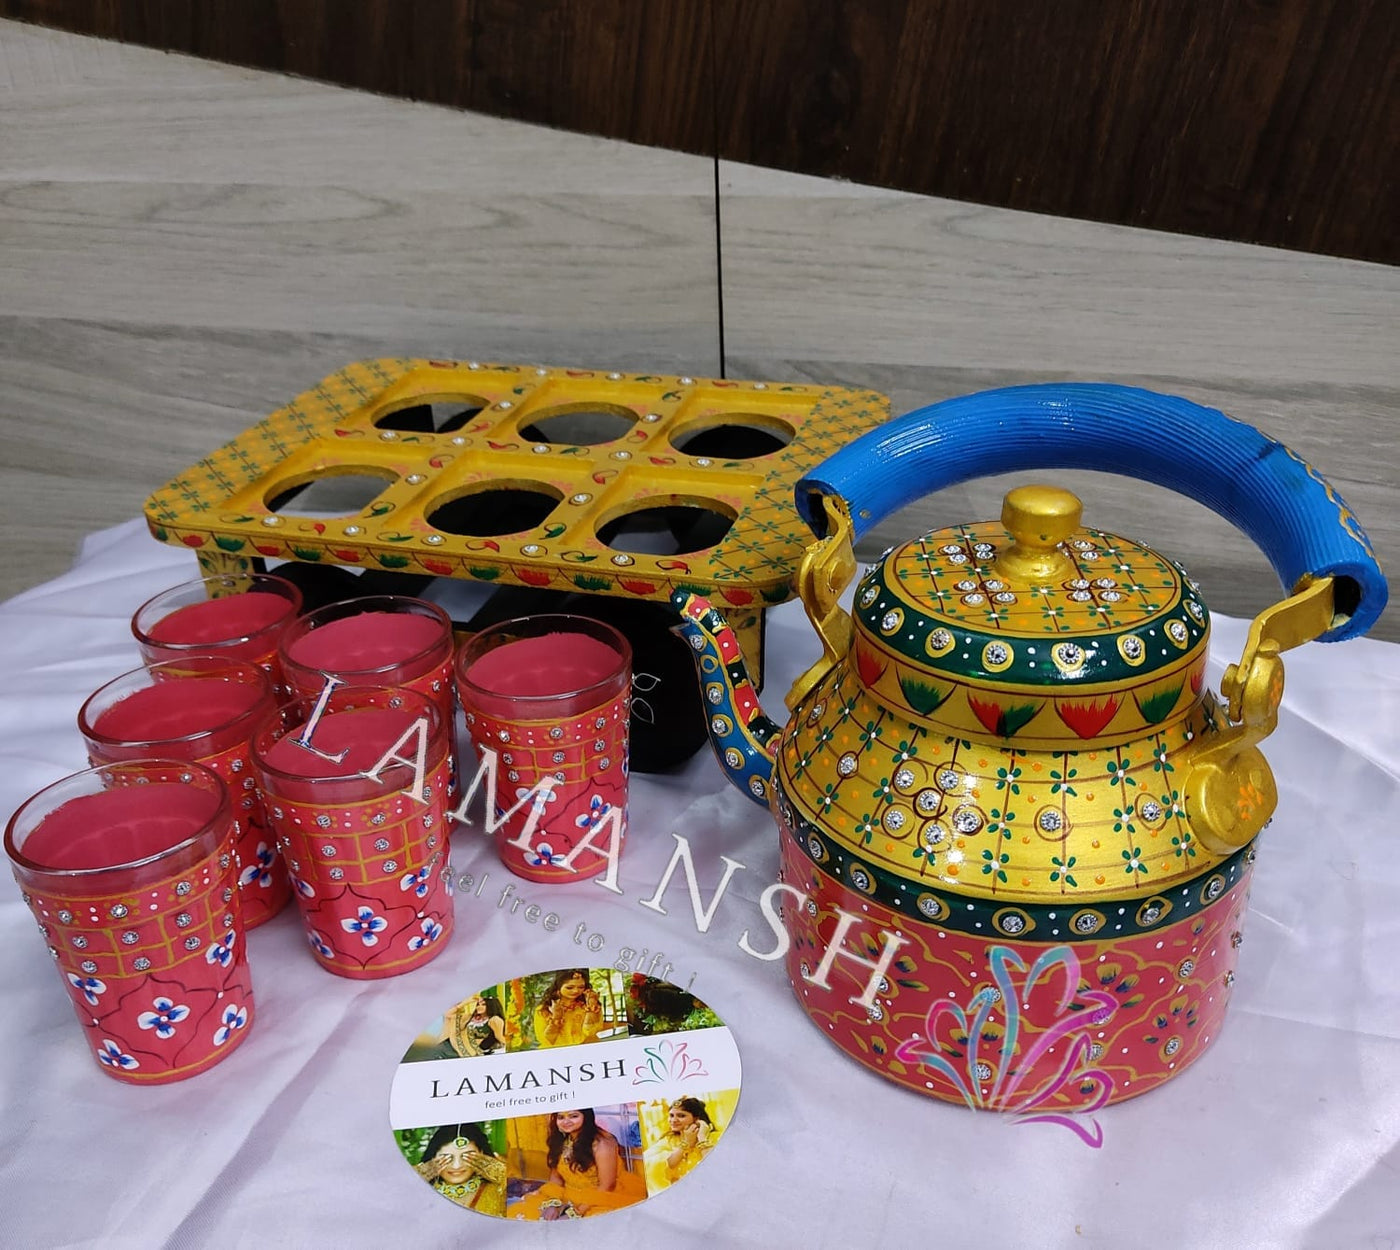 LAMANSH Assorted Colours / Aluminium LAMANSH® Hand Painted Tea Kettles with 6 Glass Sets and Wooden Cart